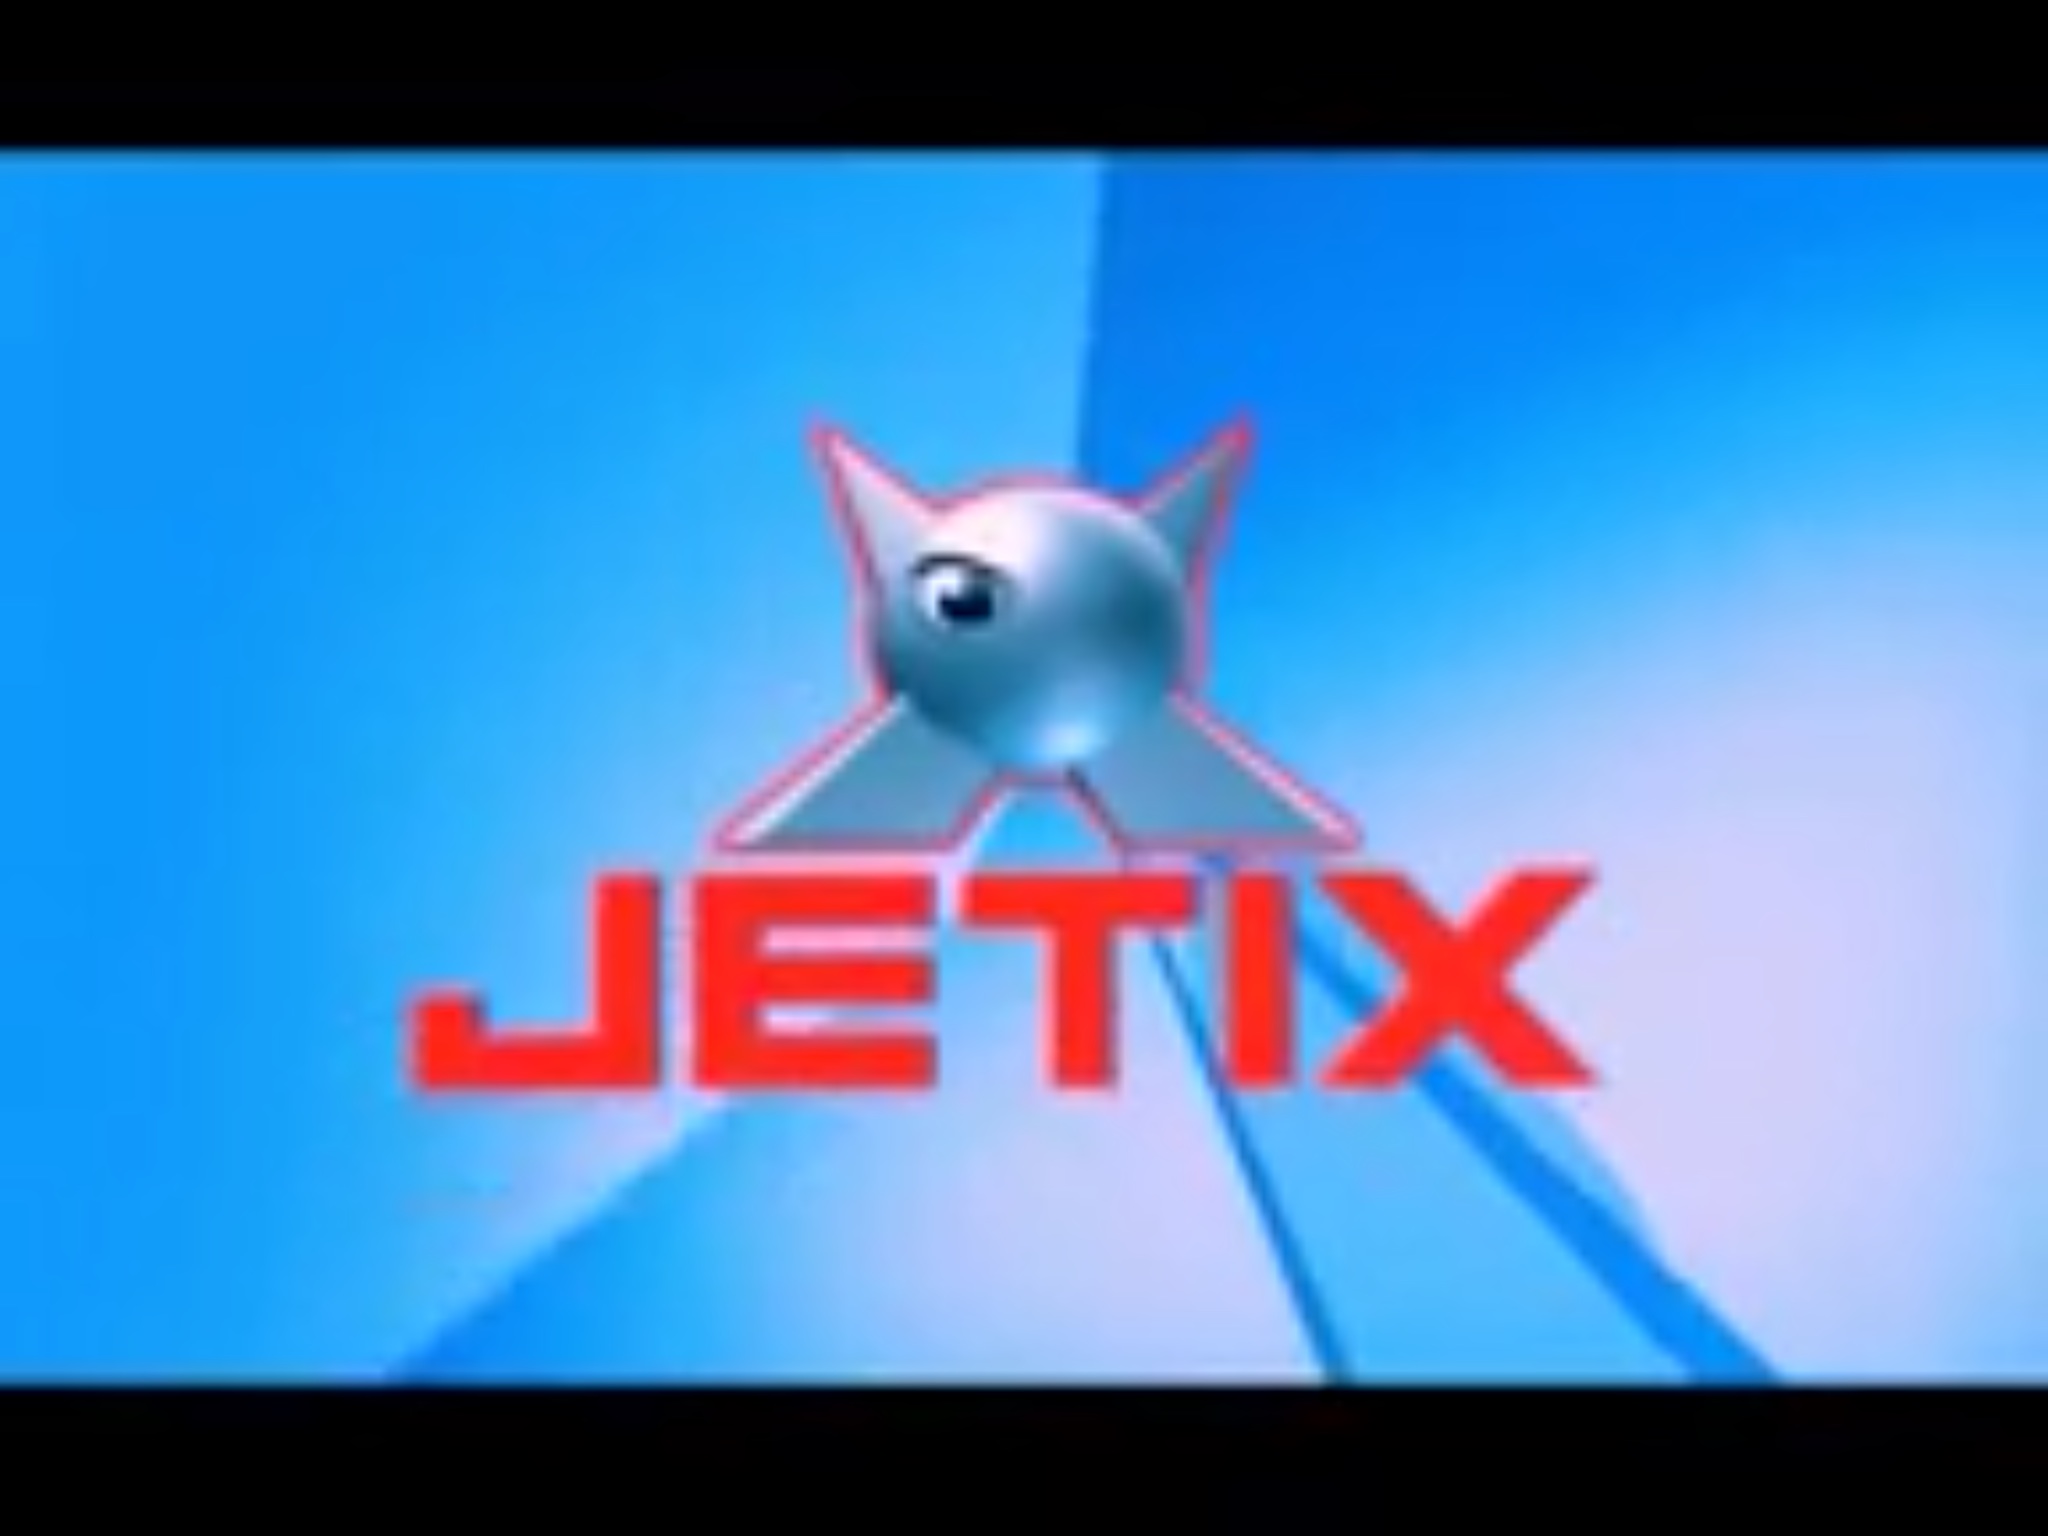 Jetix Backgrounds on Wallpapers Vista